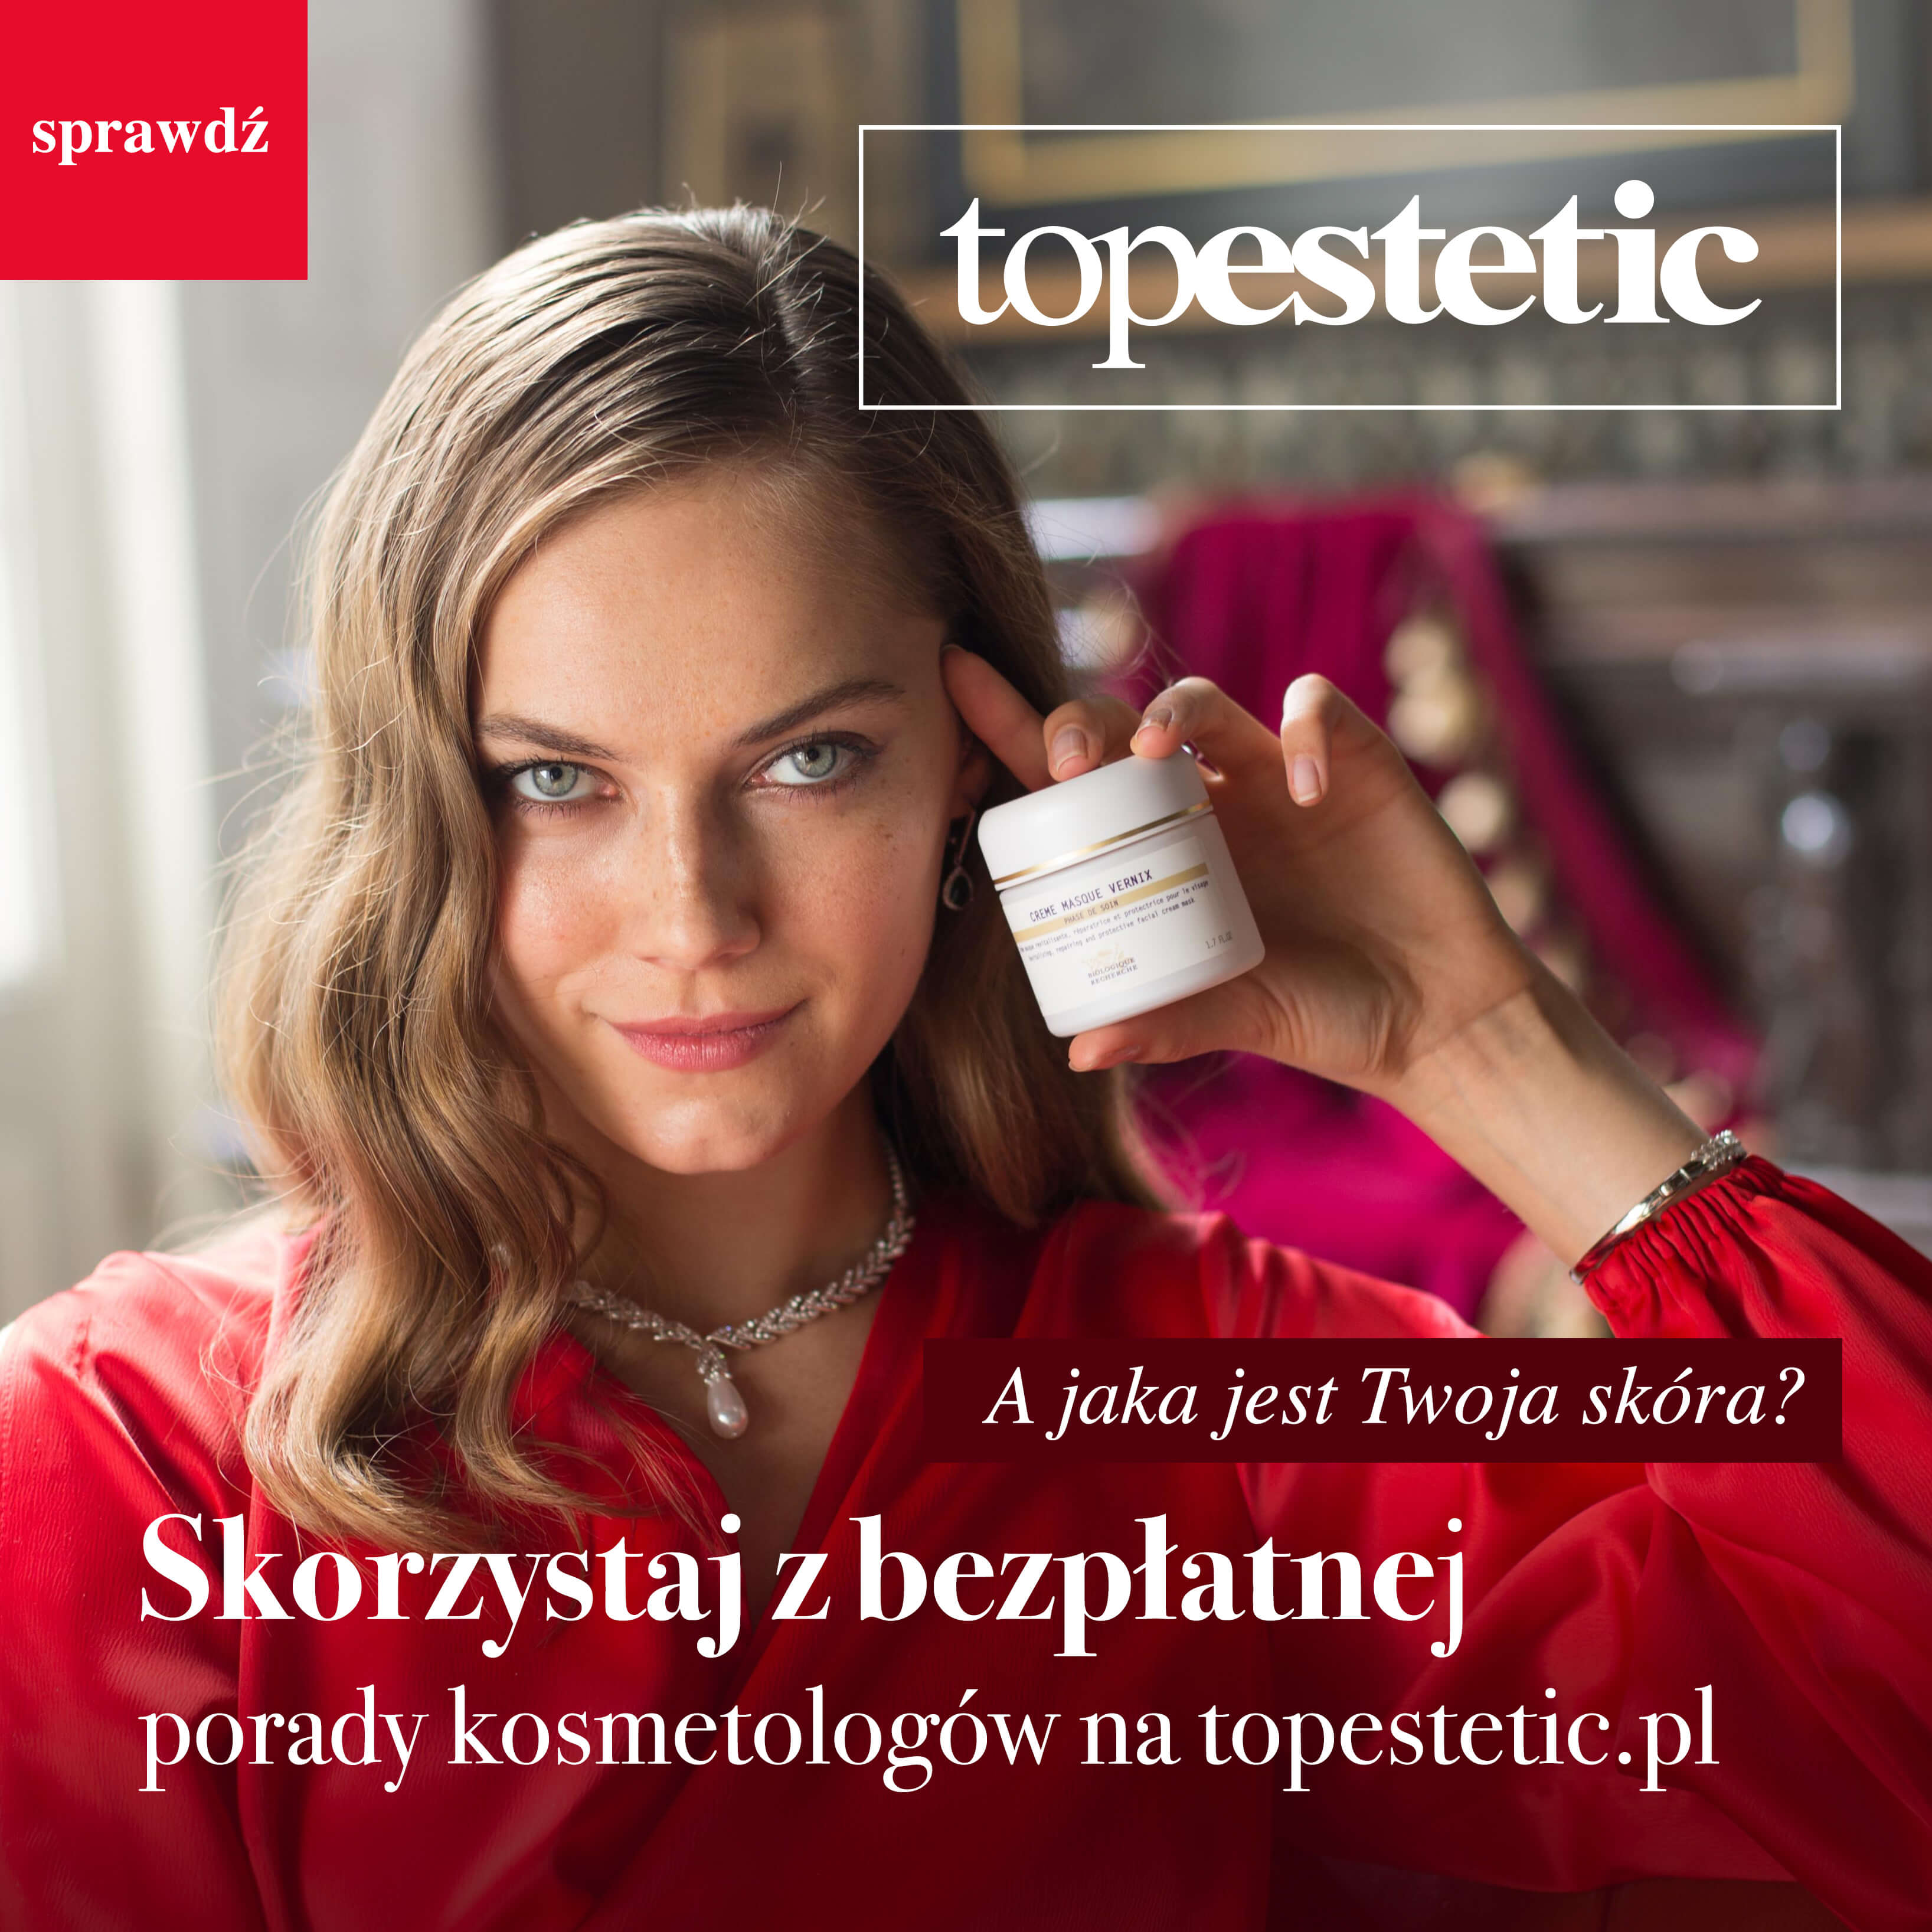 Reklamy topestetic